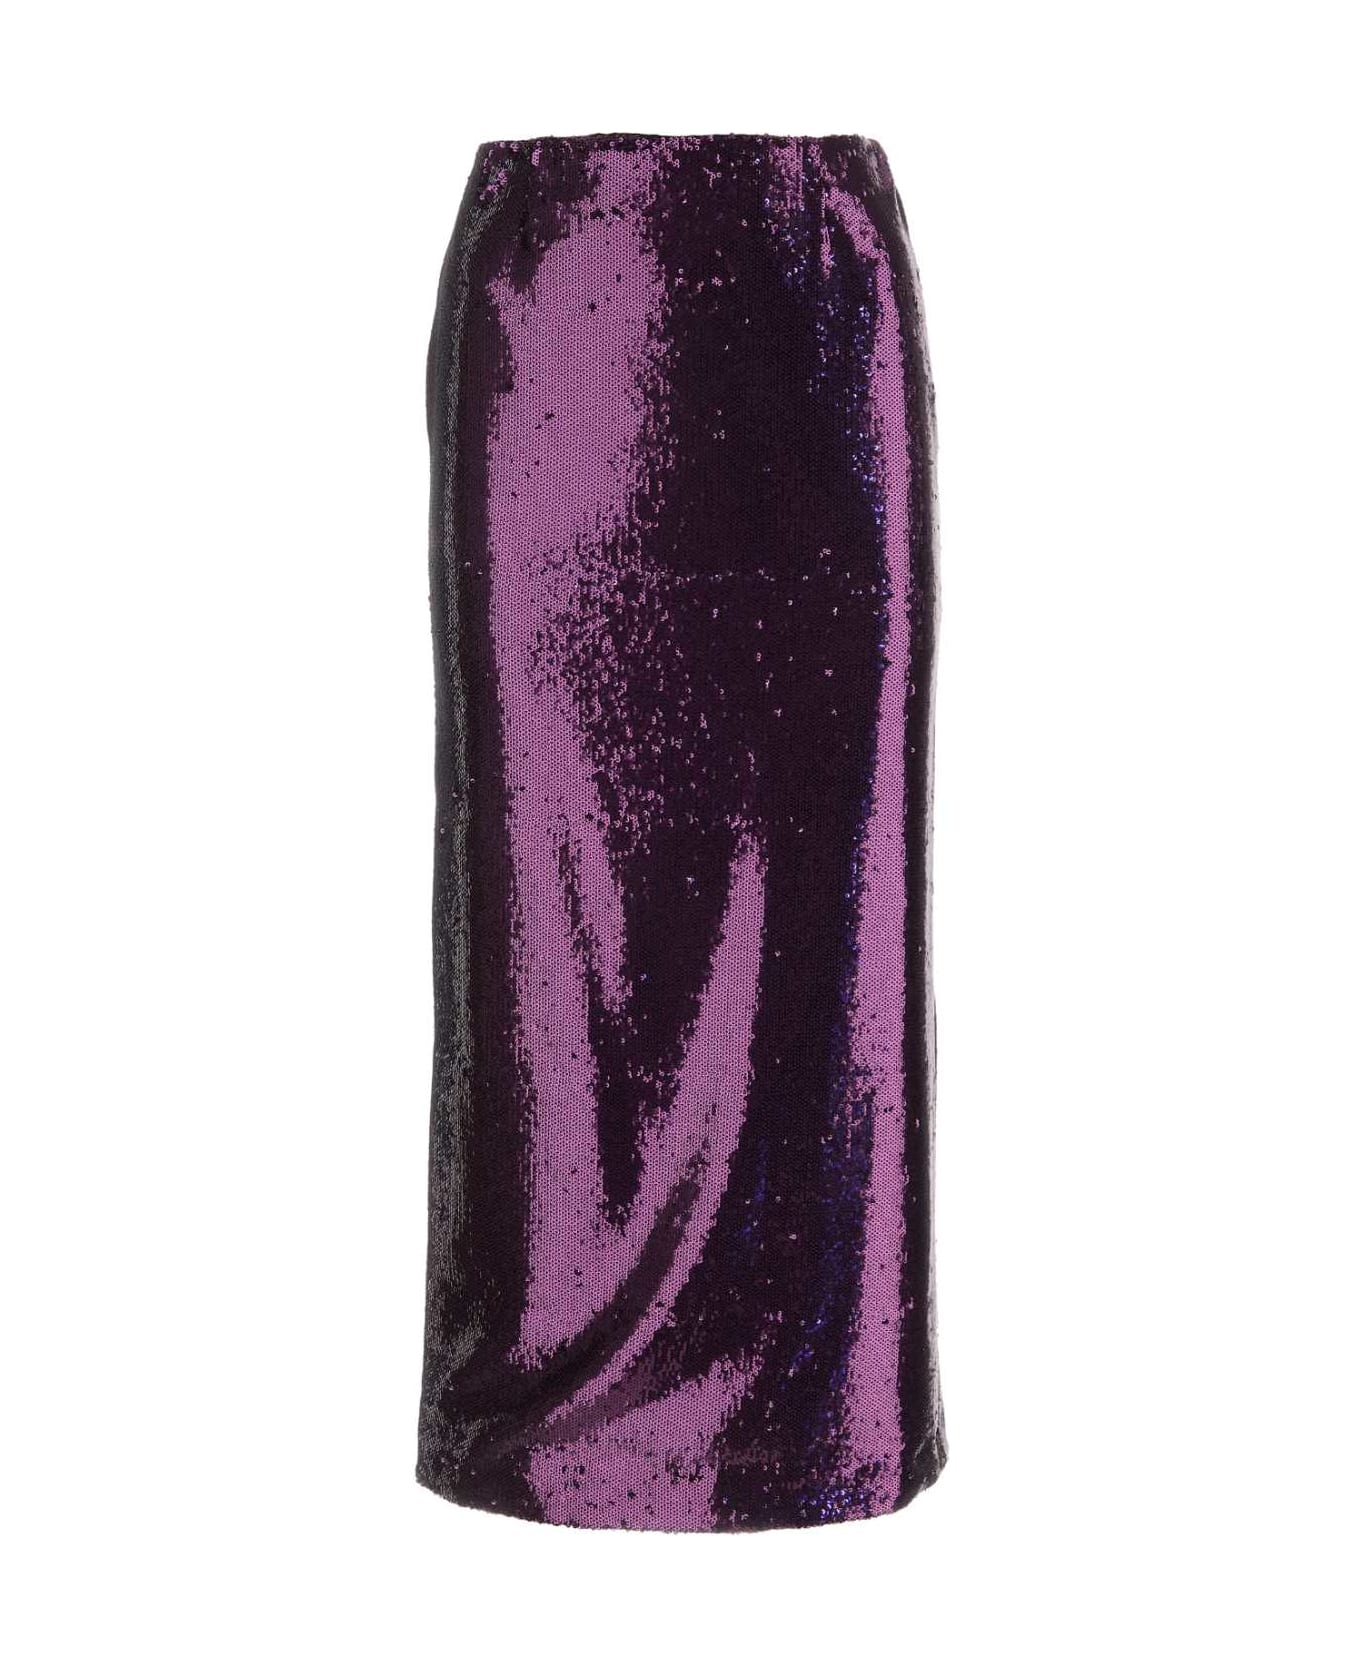 Philosophy di Lorenzo Serafini Purple Sequins Skirt - 0232 スカート